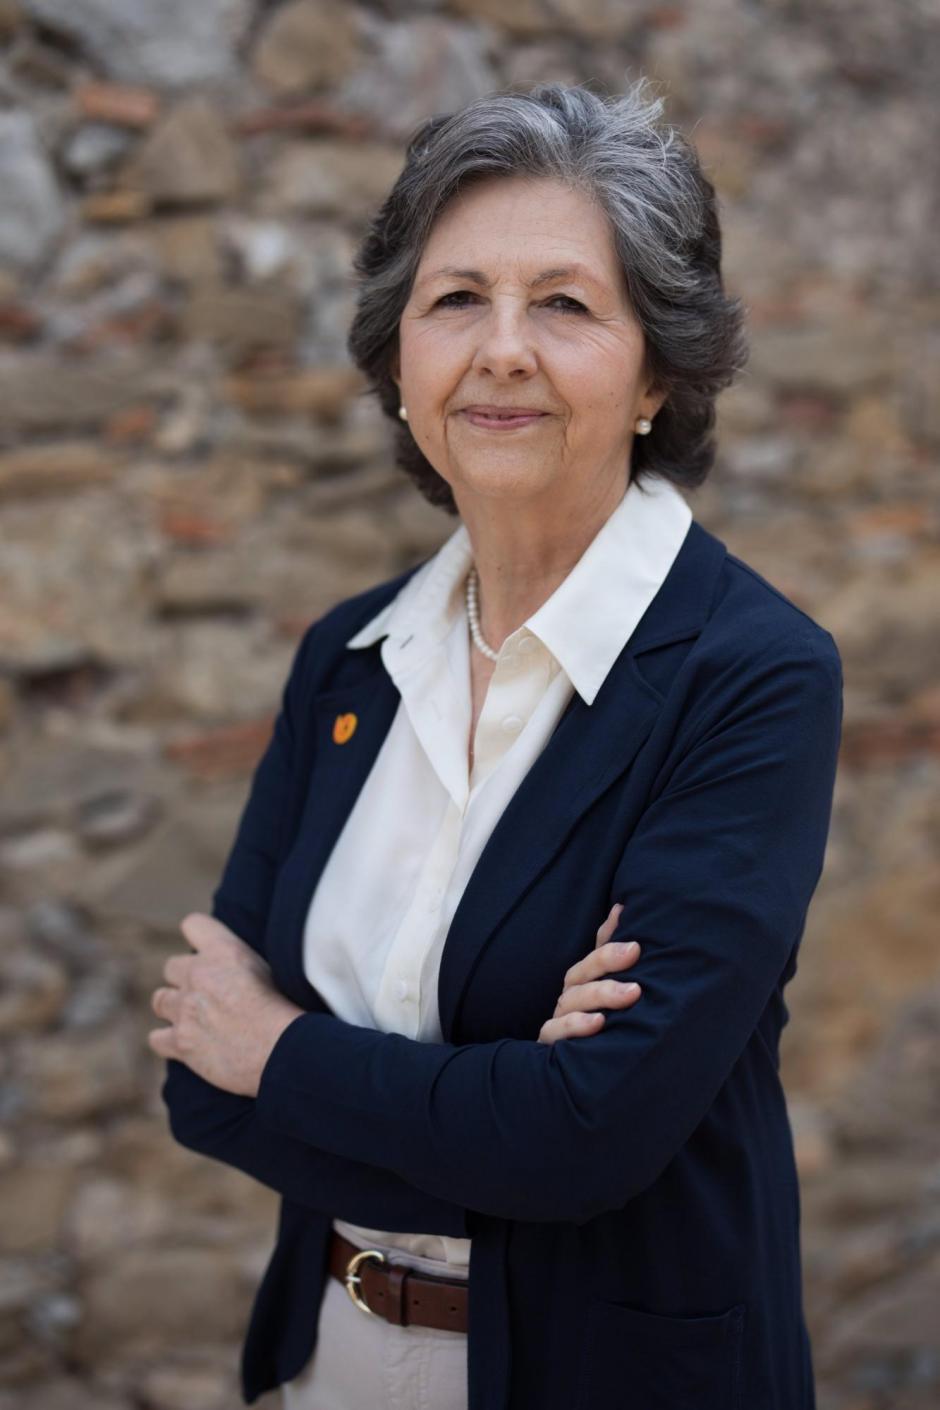 La nueva presidenta de Societat Civil Catalana (SCC), Elda Mata